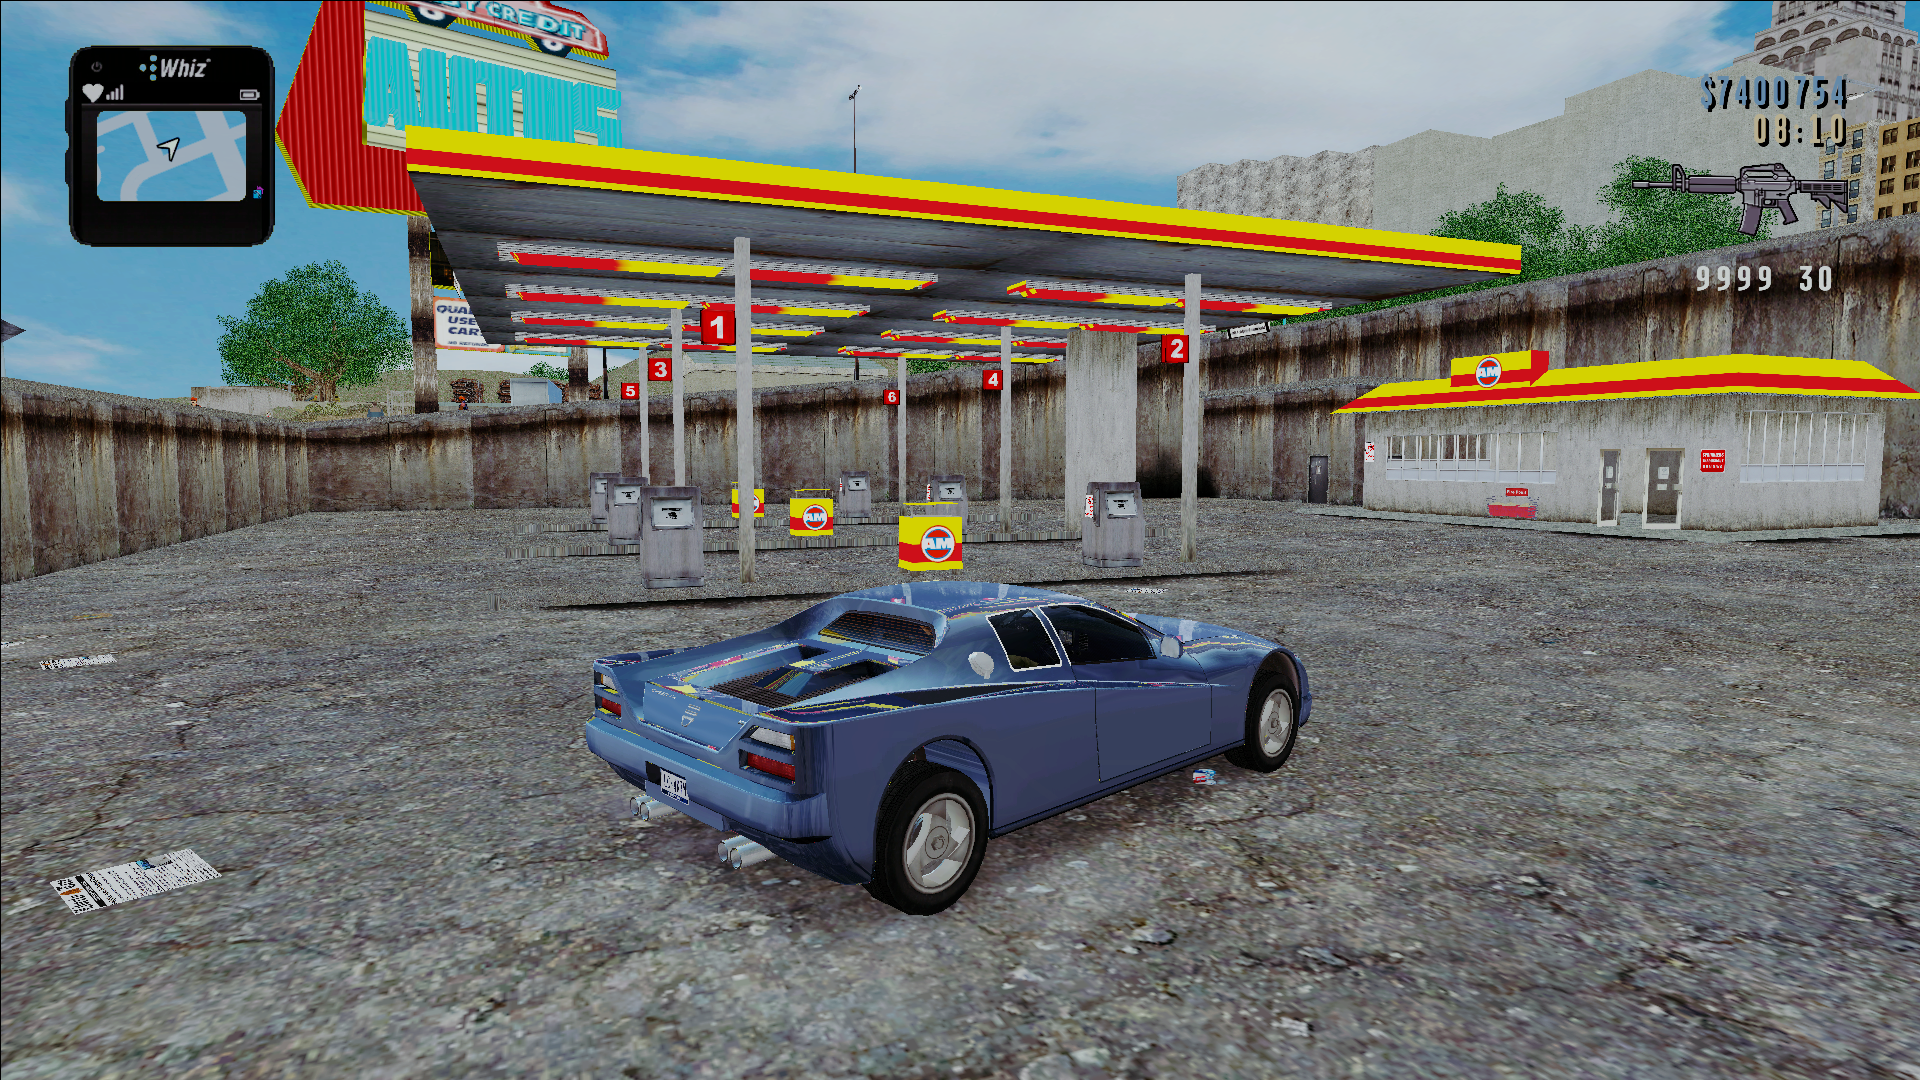 GTA 3 Cars mod? : r/GTATrilogyMods